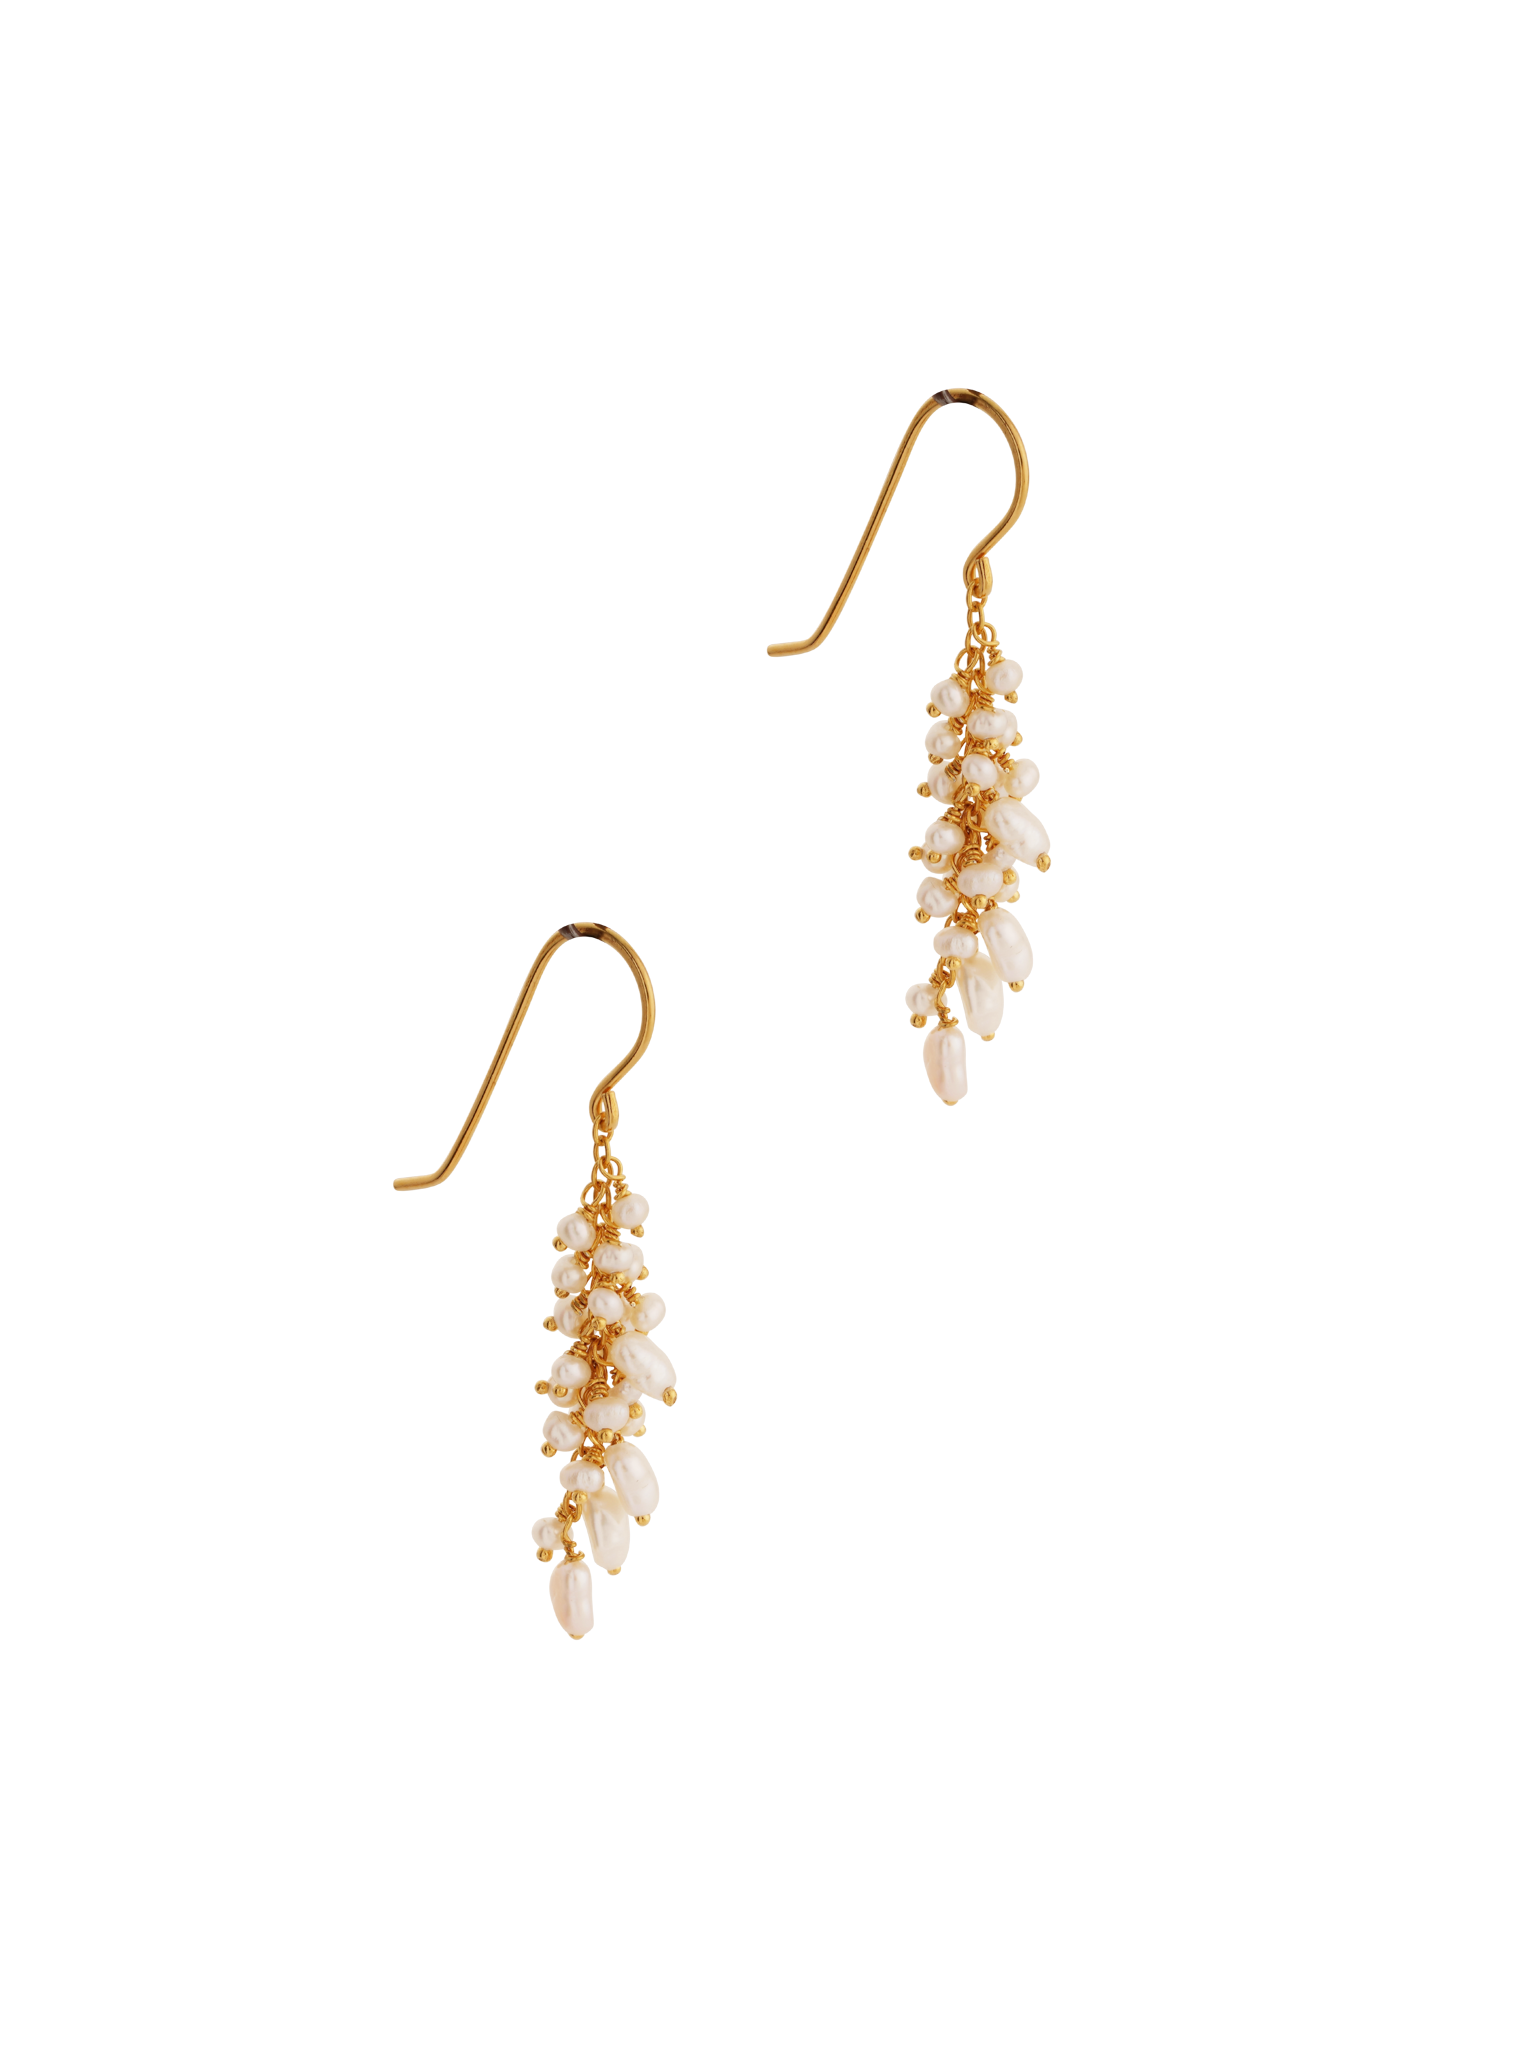 Pearl blossom earrings